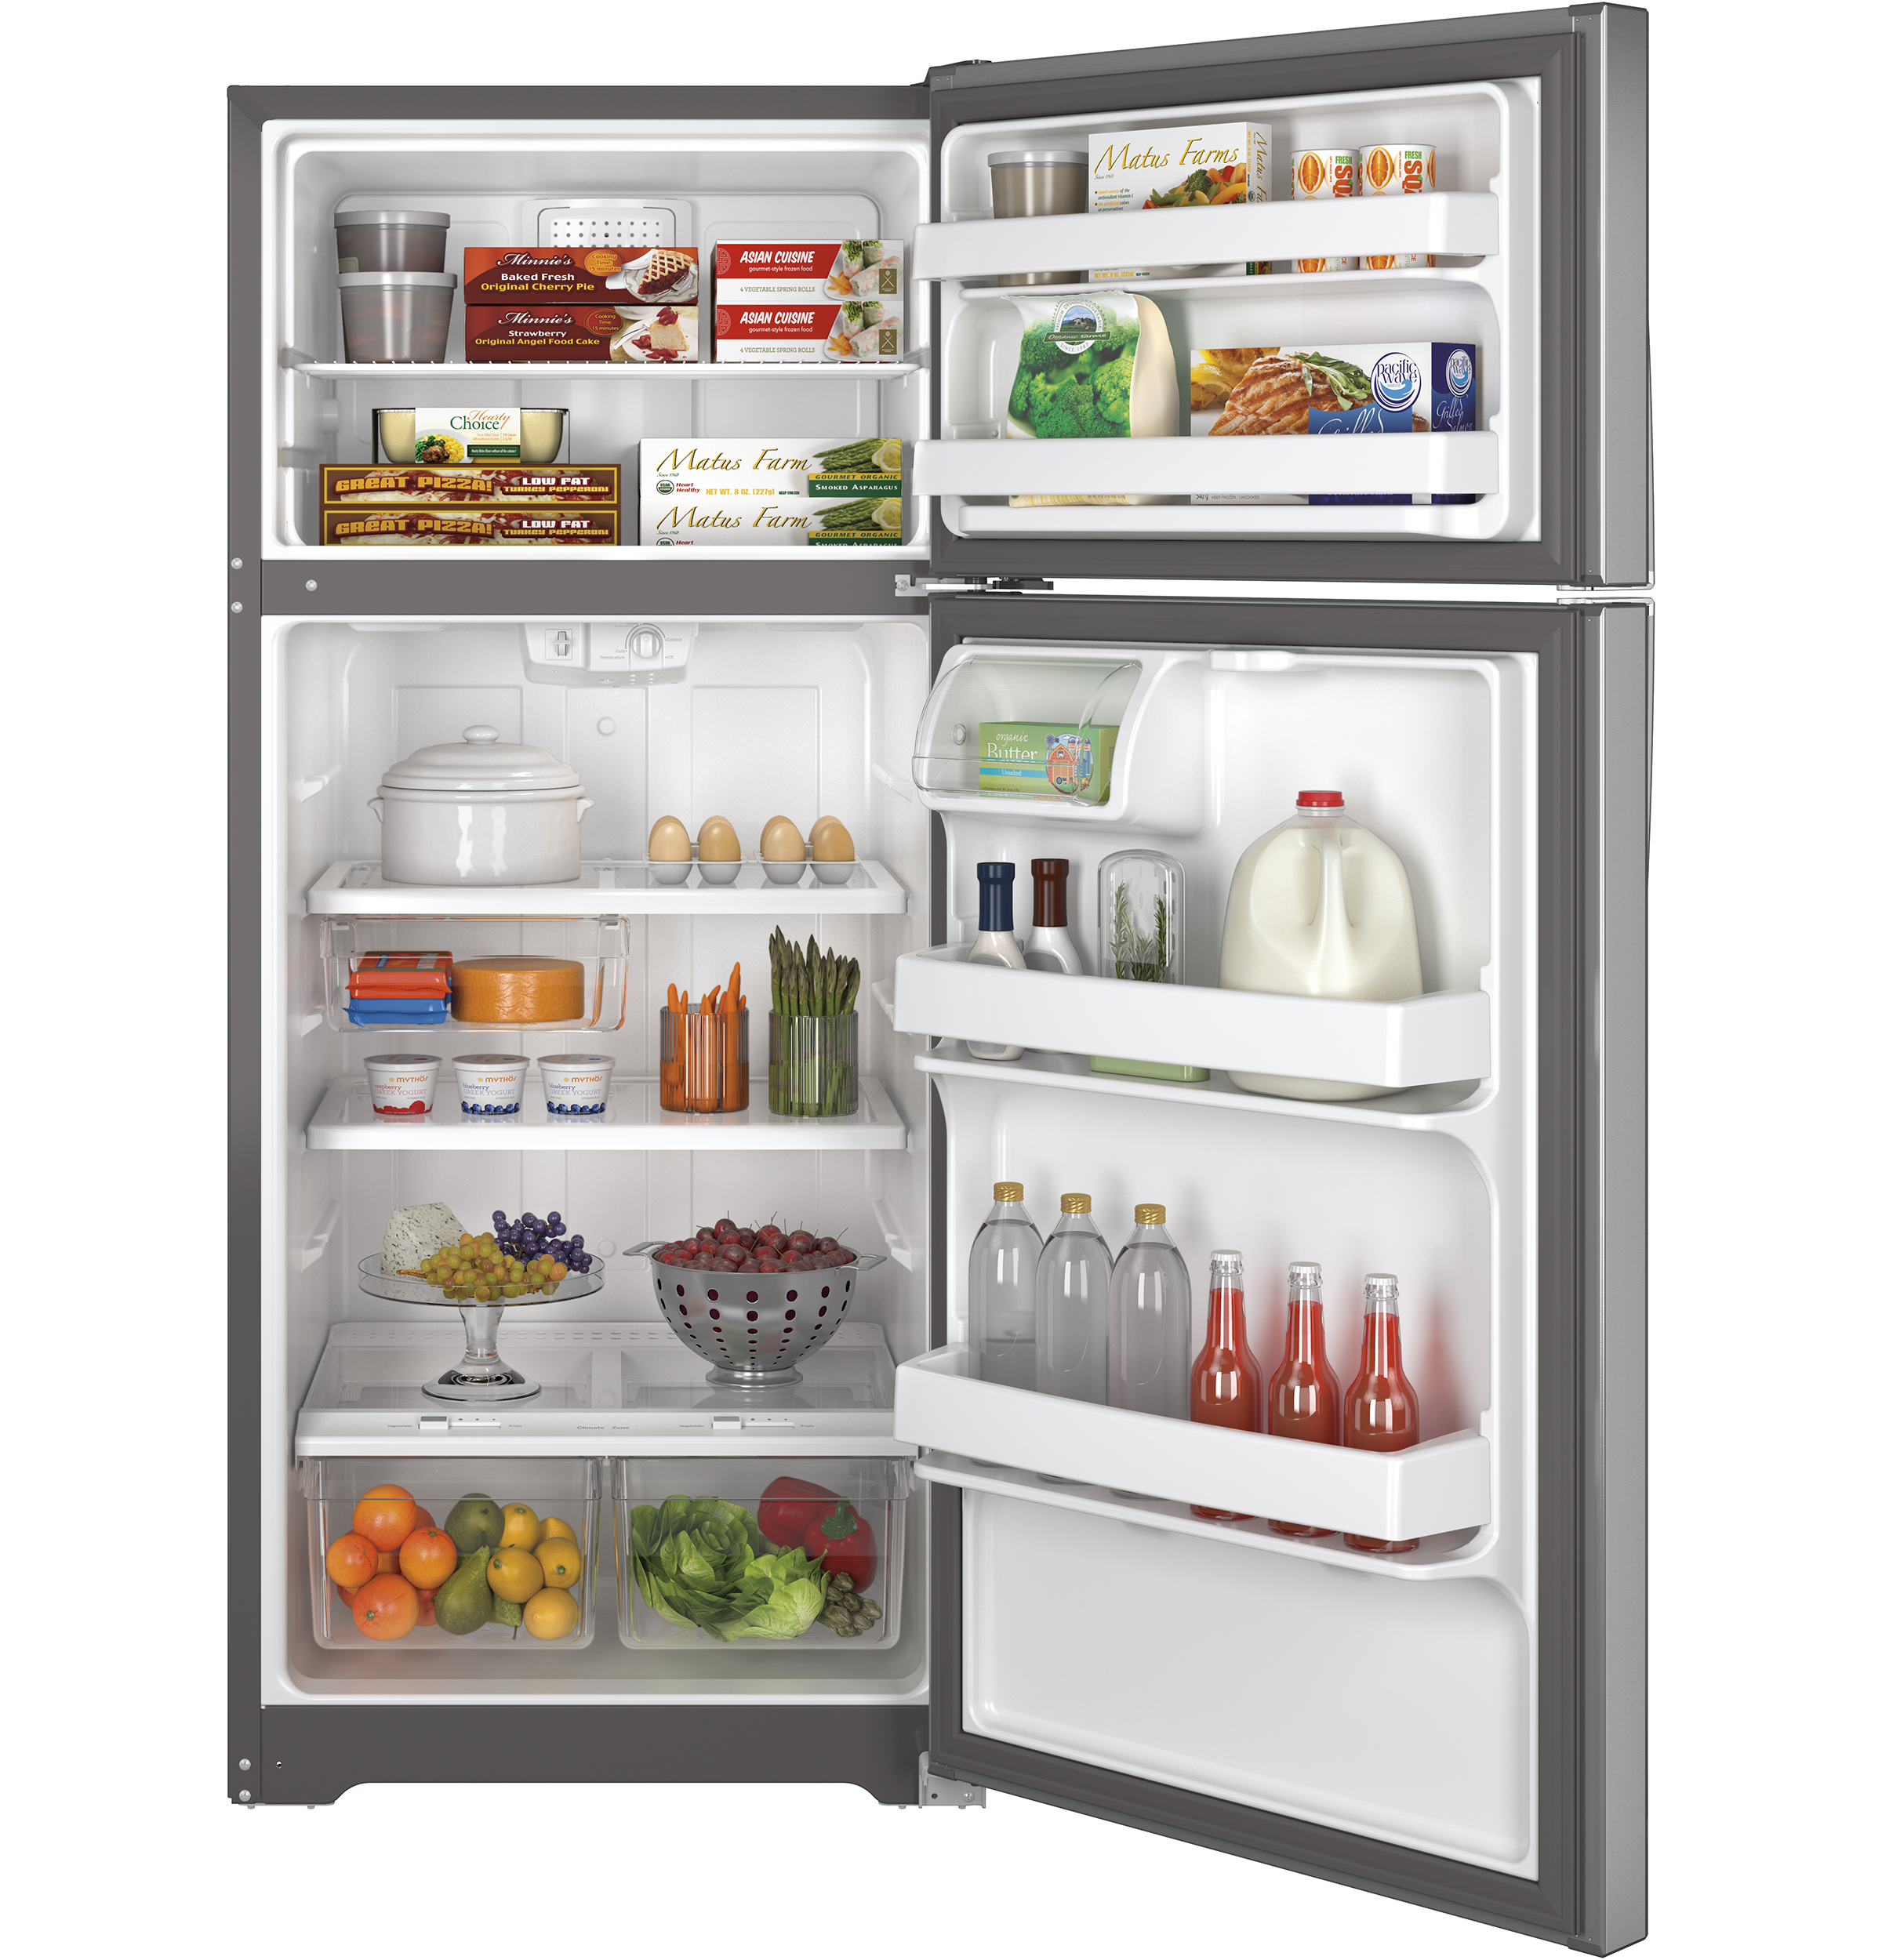  GE - 15.5 Cu. Ft. Top-Freezer Refrigerator